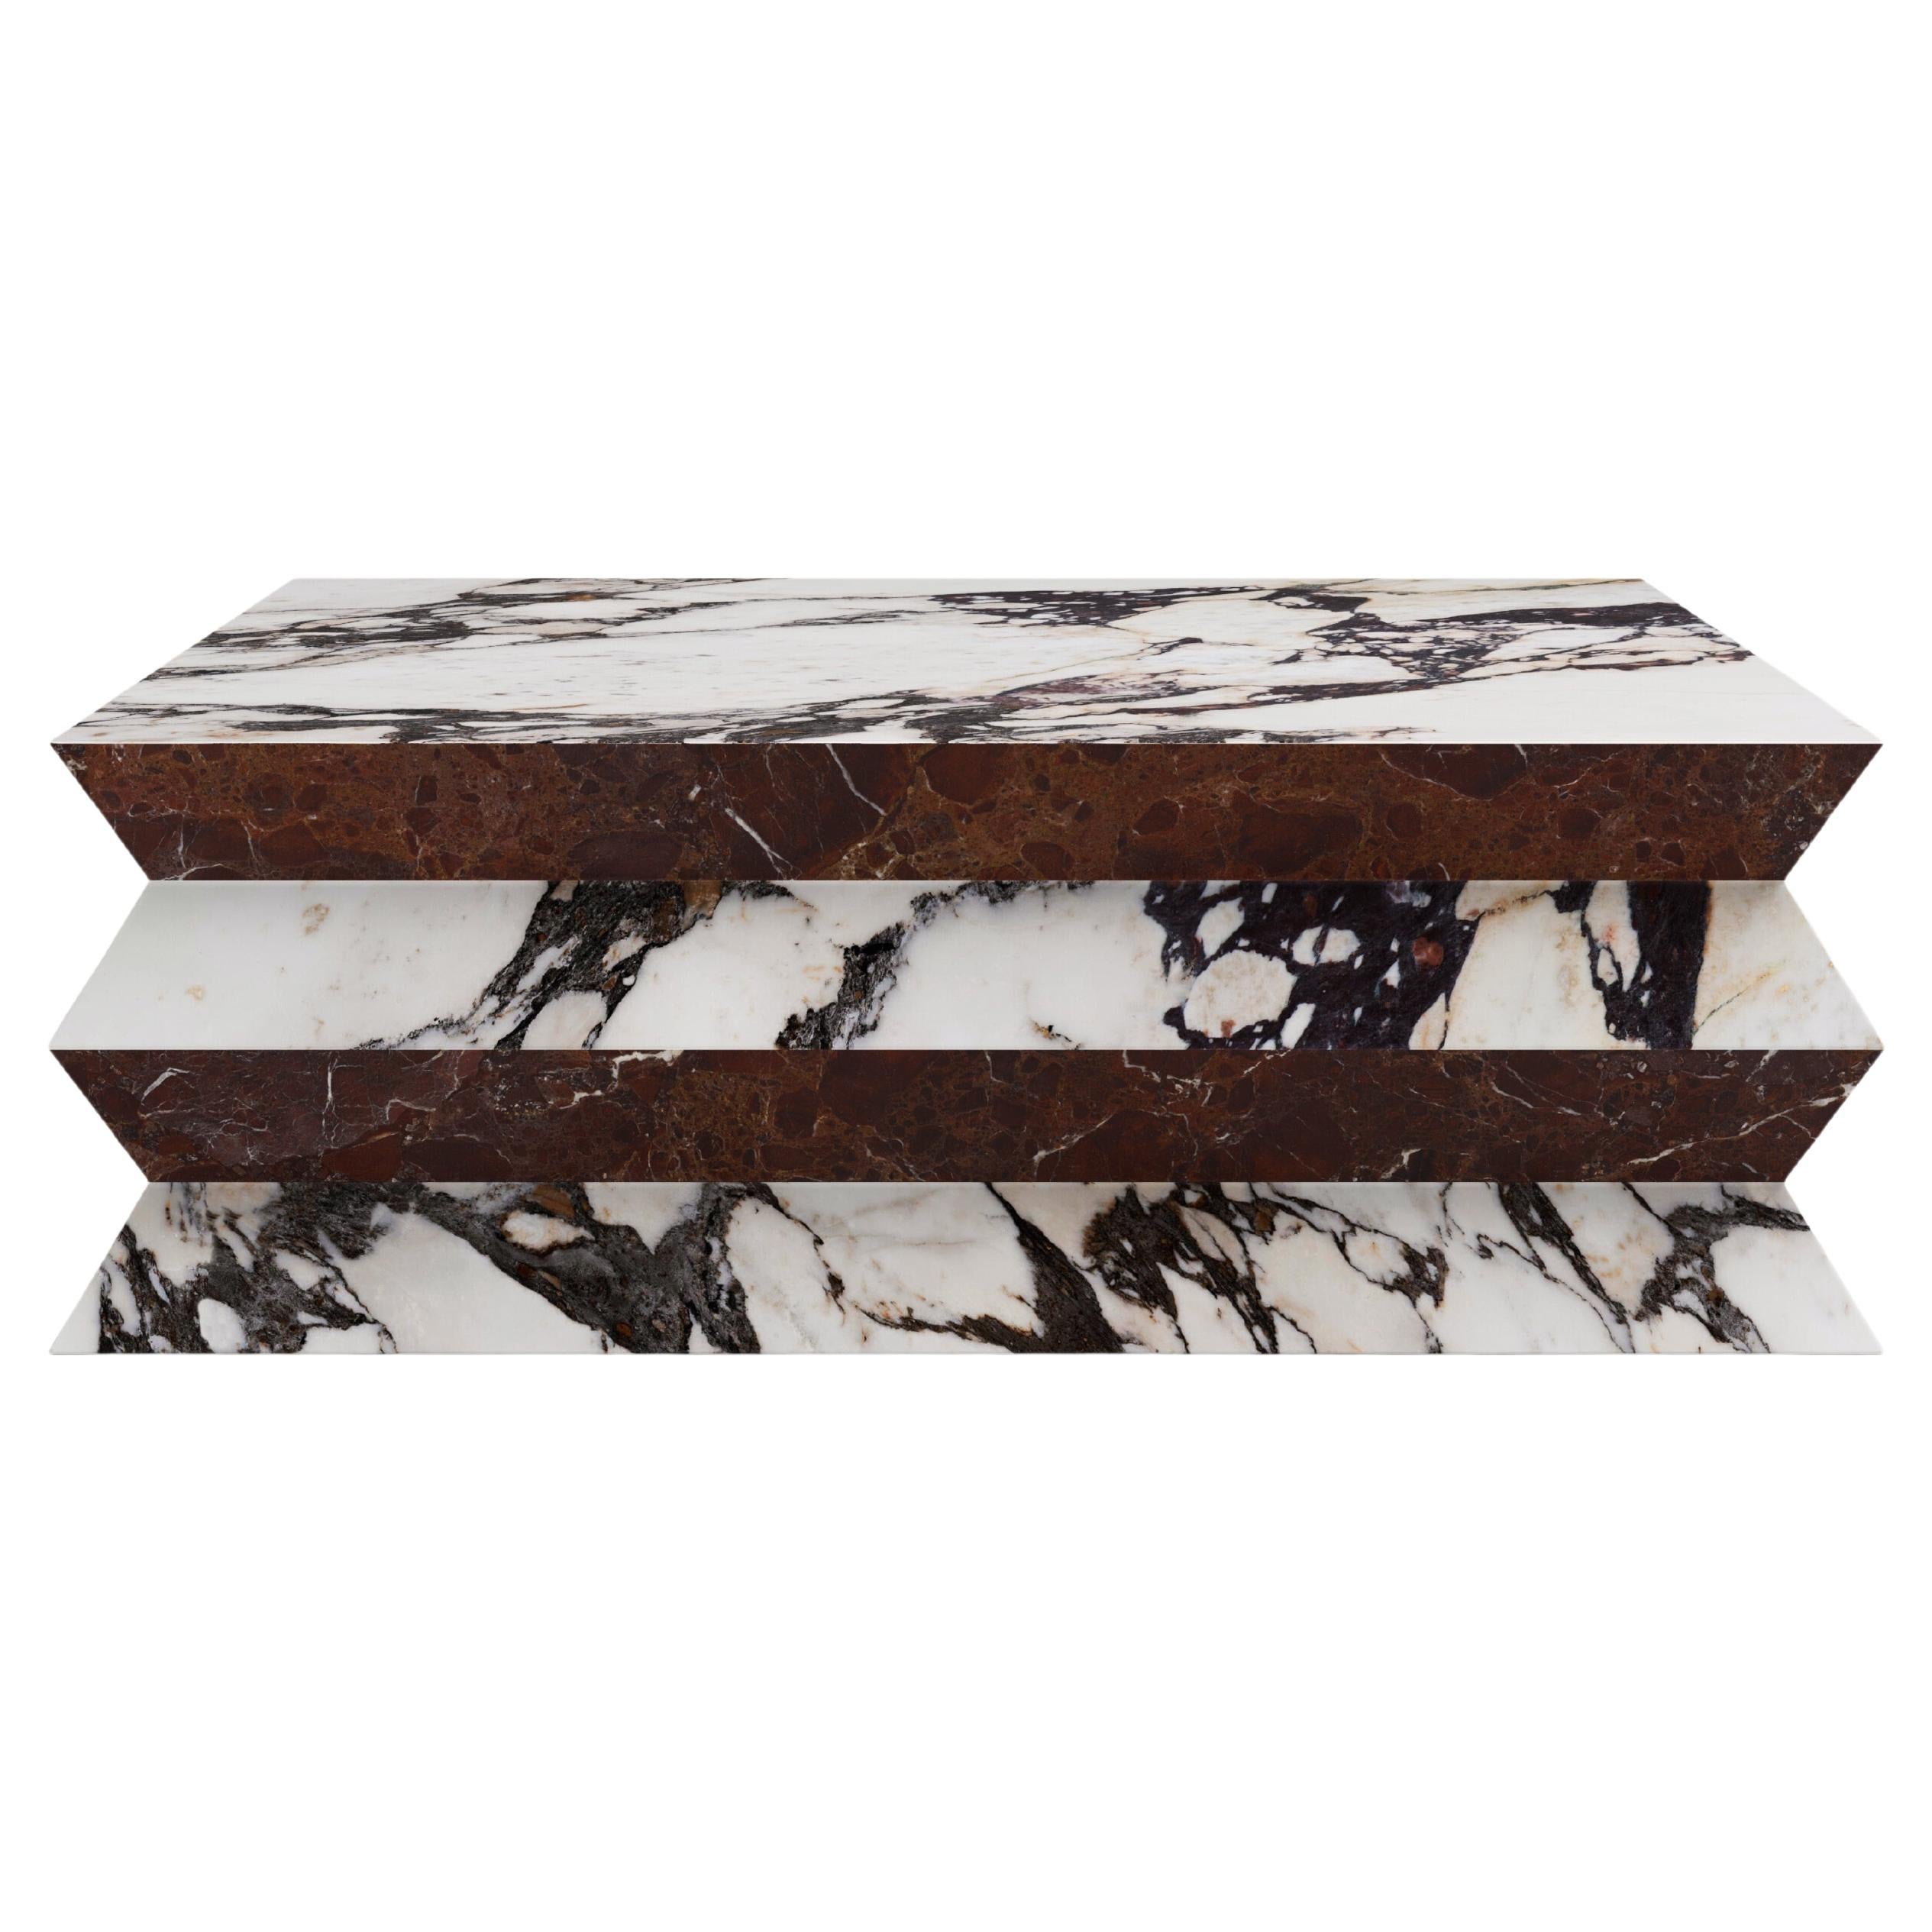 FORM(LA) table basse carrée Grinza 48 po. (L) x 48 po. (L) x 16 po. (H) marbre Calacatta Viola  en vente